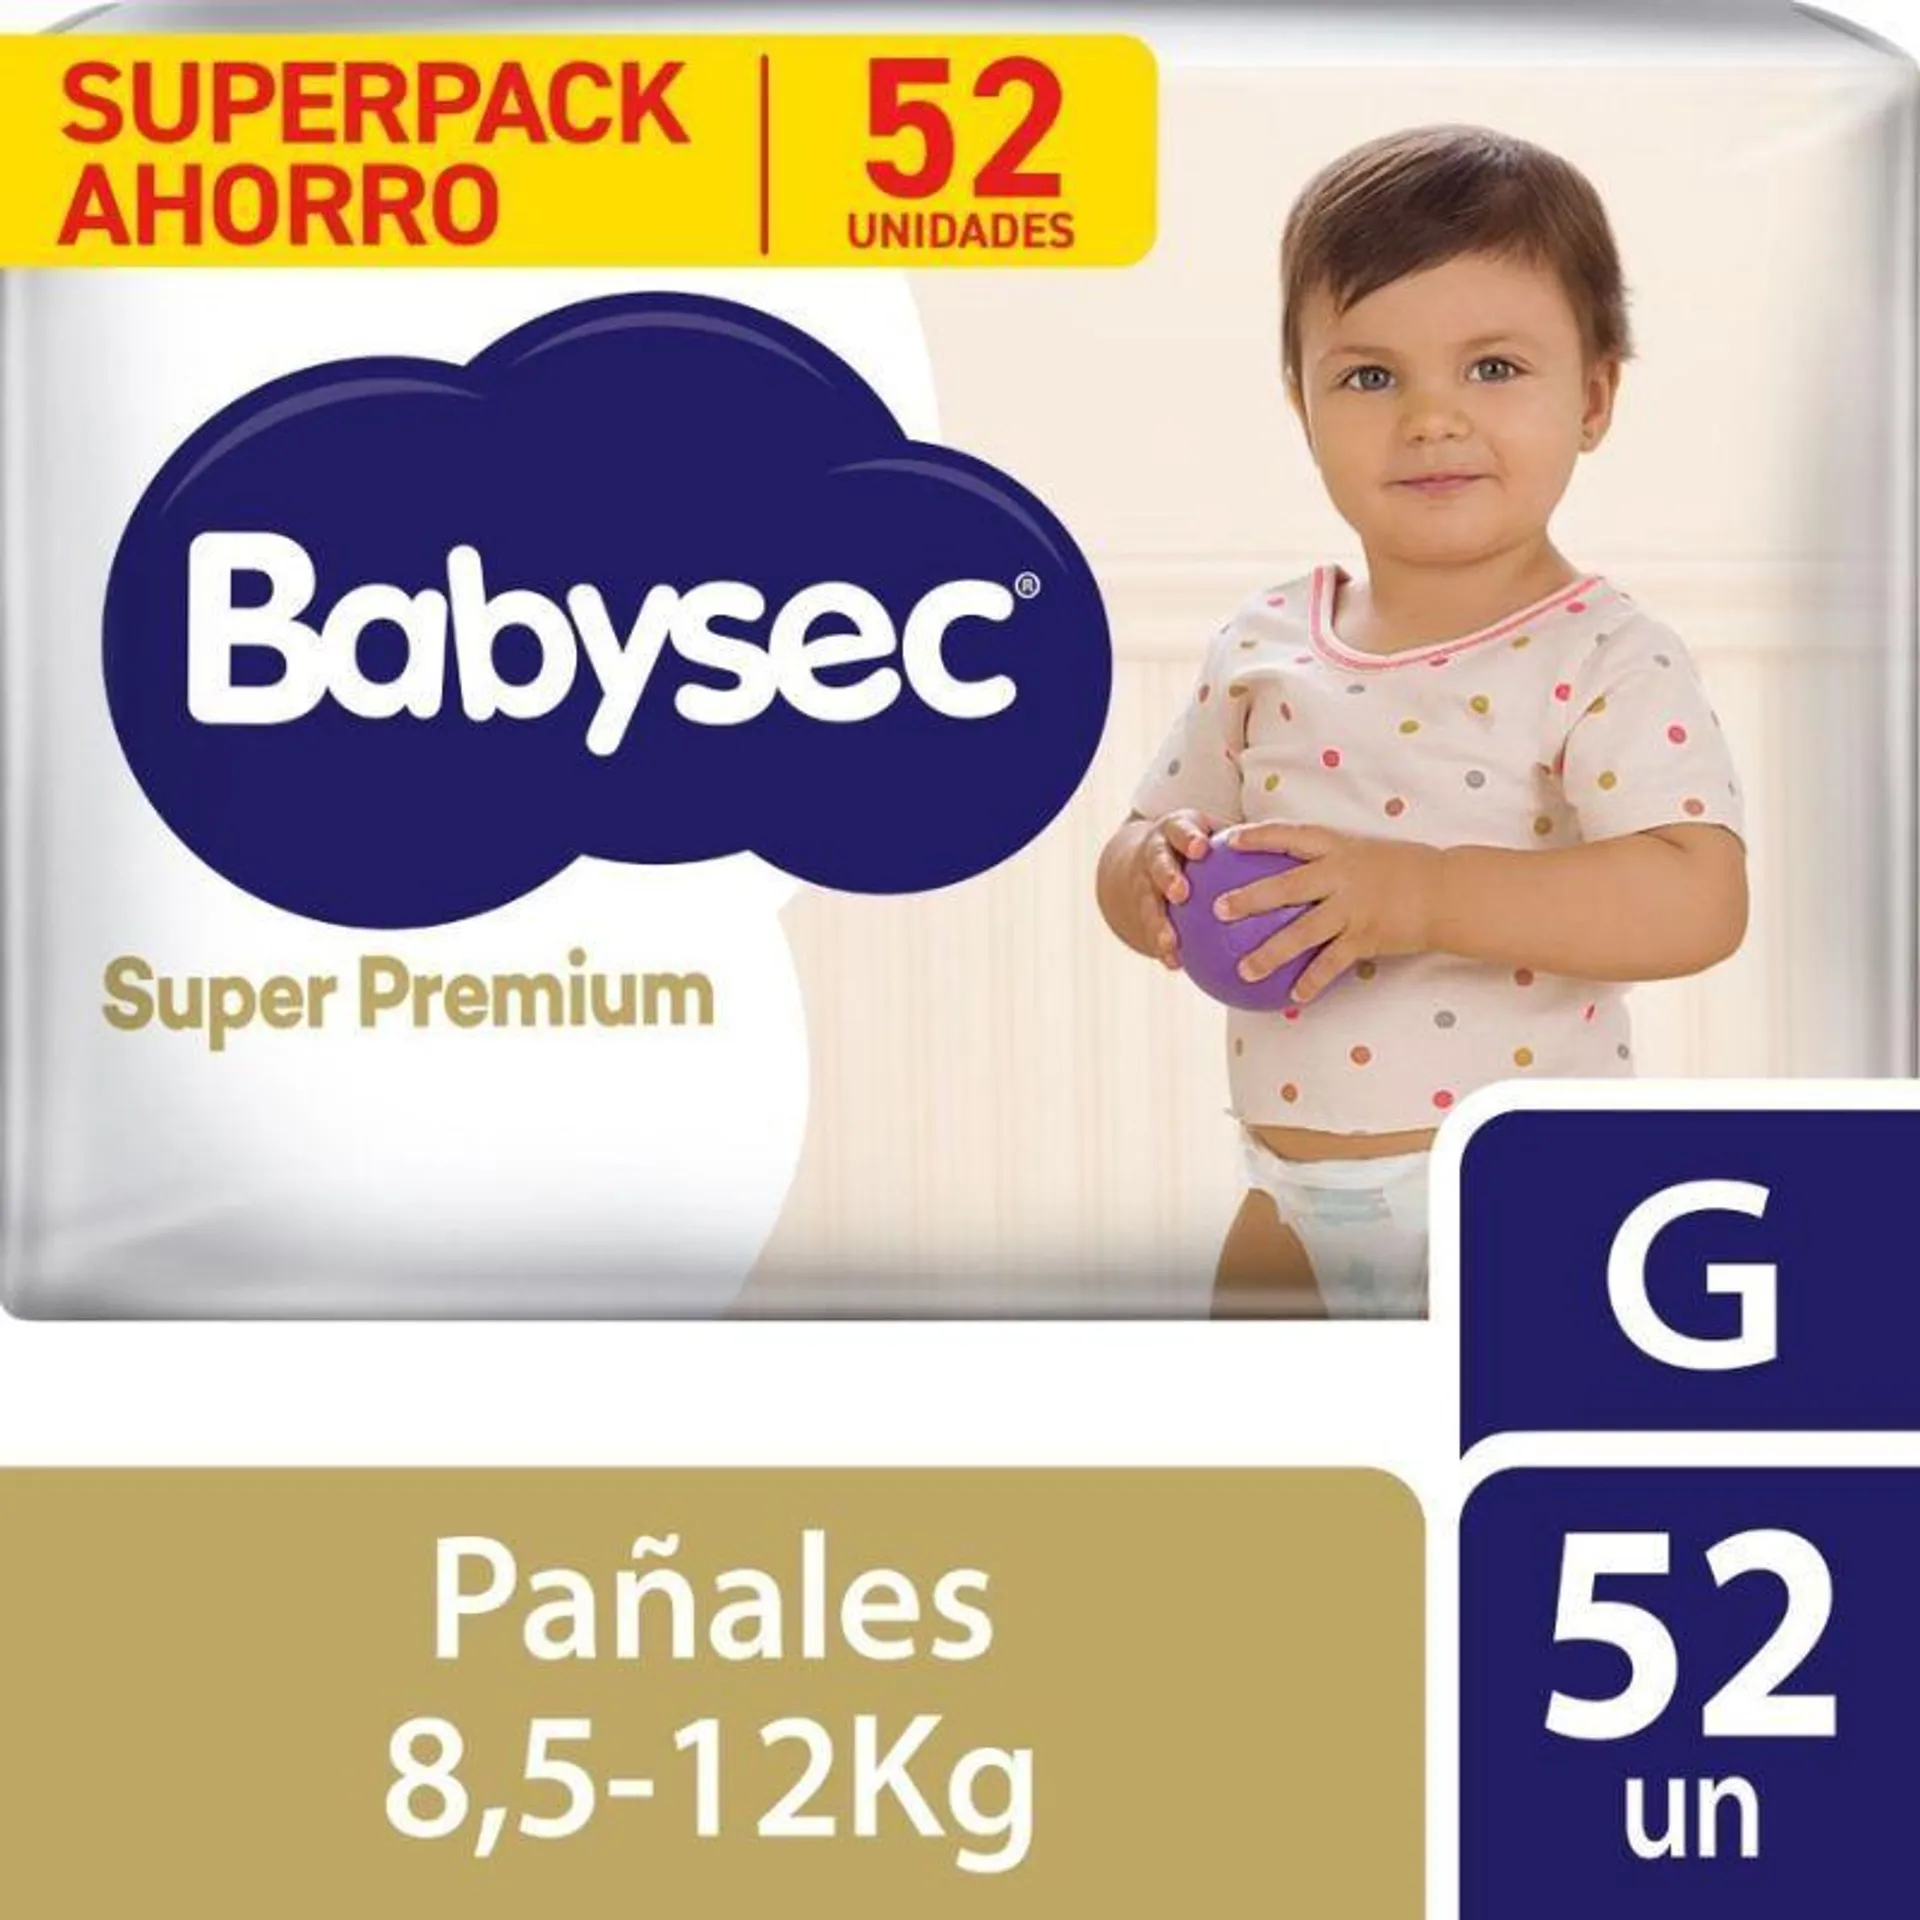 Pañal Babysec Super Premium Talla G - Bolsa 52 UN